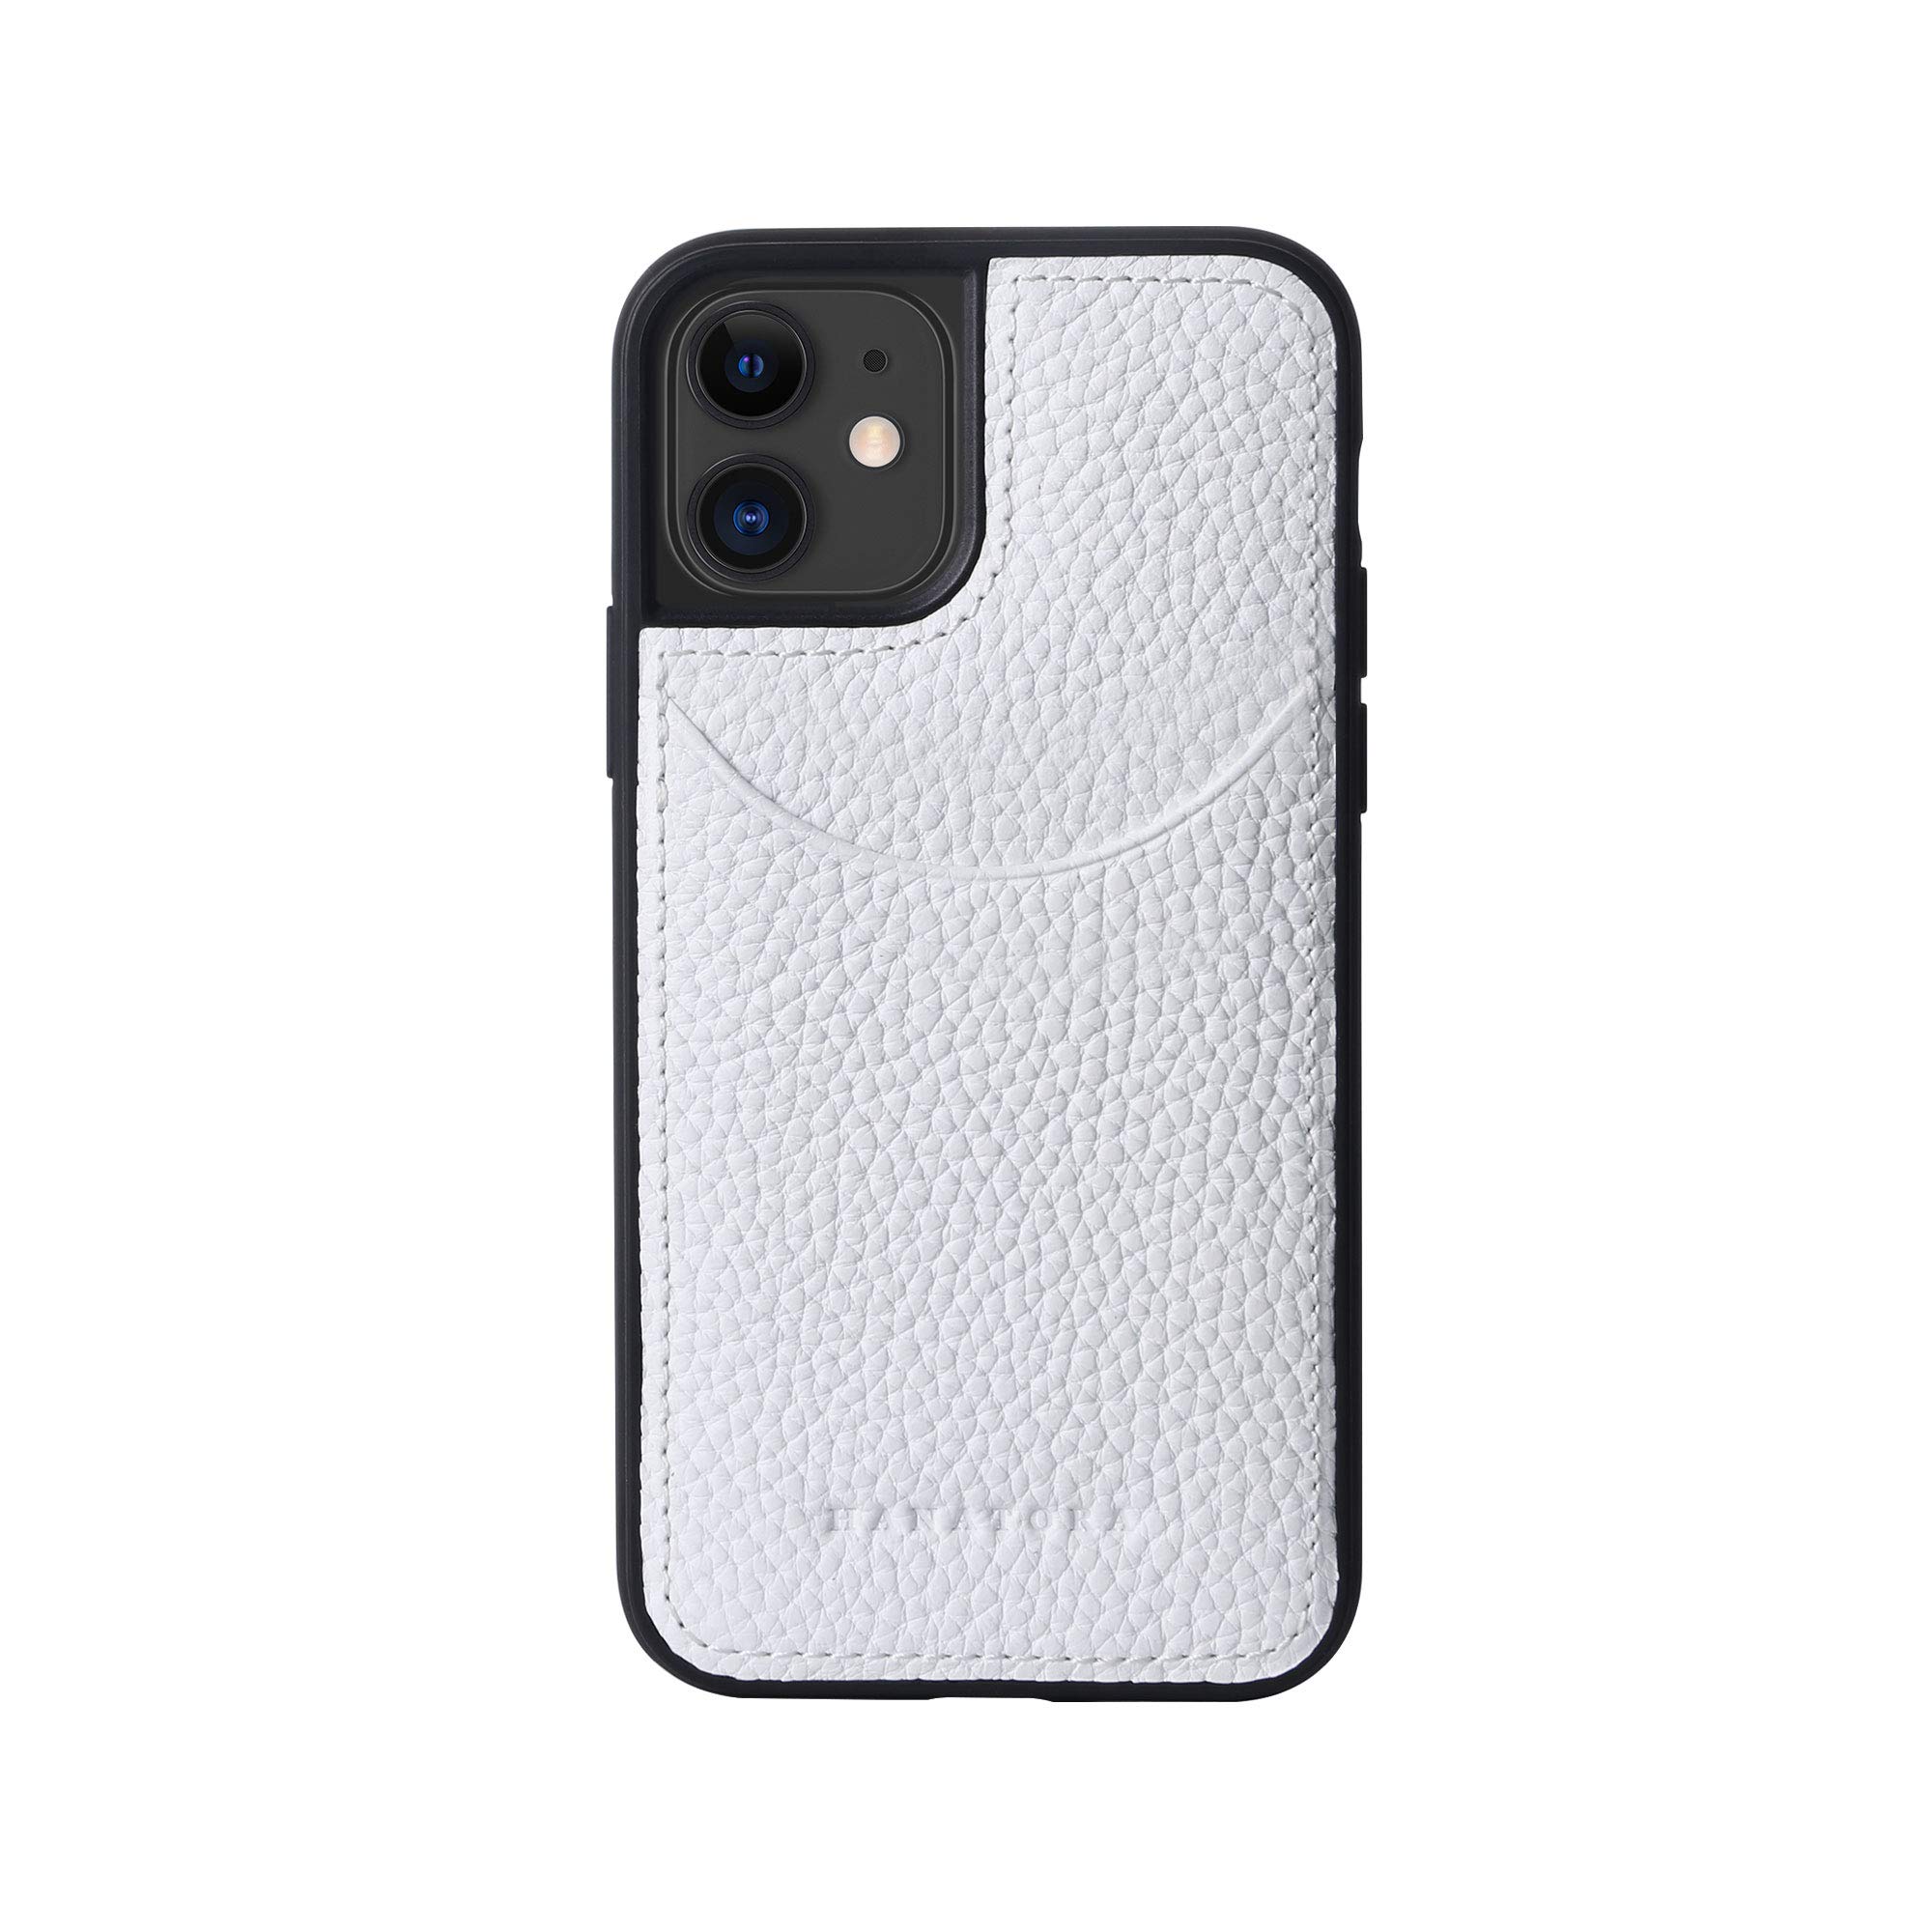 [HANATORA] iPhone12 mini ケース 本革 シュリンクカーフレザー カードポケット 耐衝撃 ハンドメイド ギフト おしゃれ シンプル 大人可愛い メンズ レディース スマホケース 白 シロ ホワイト CPG-12Mini-White